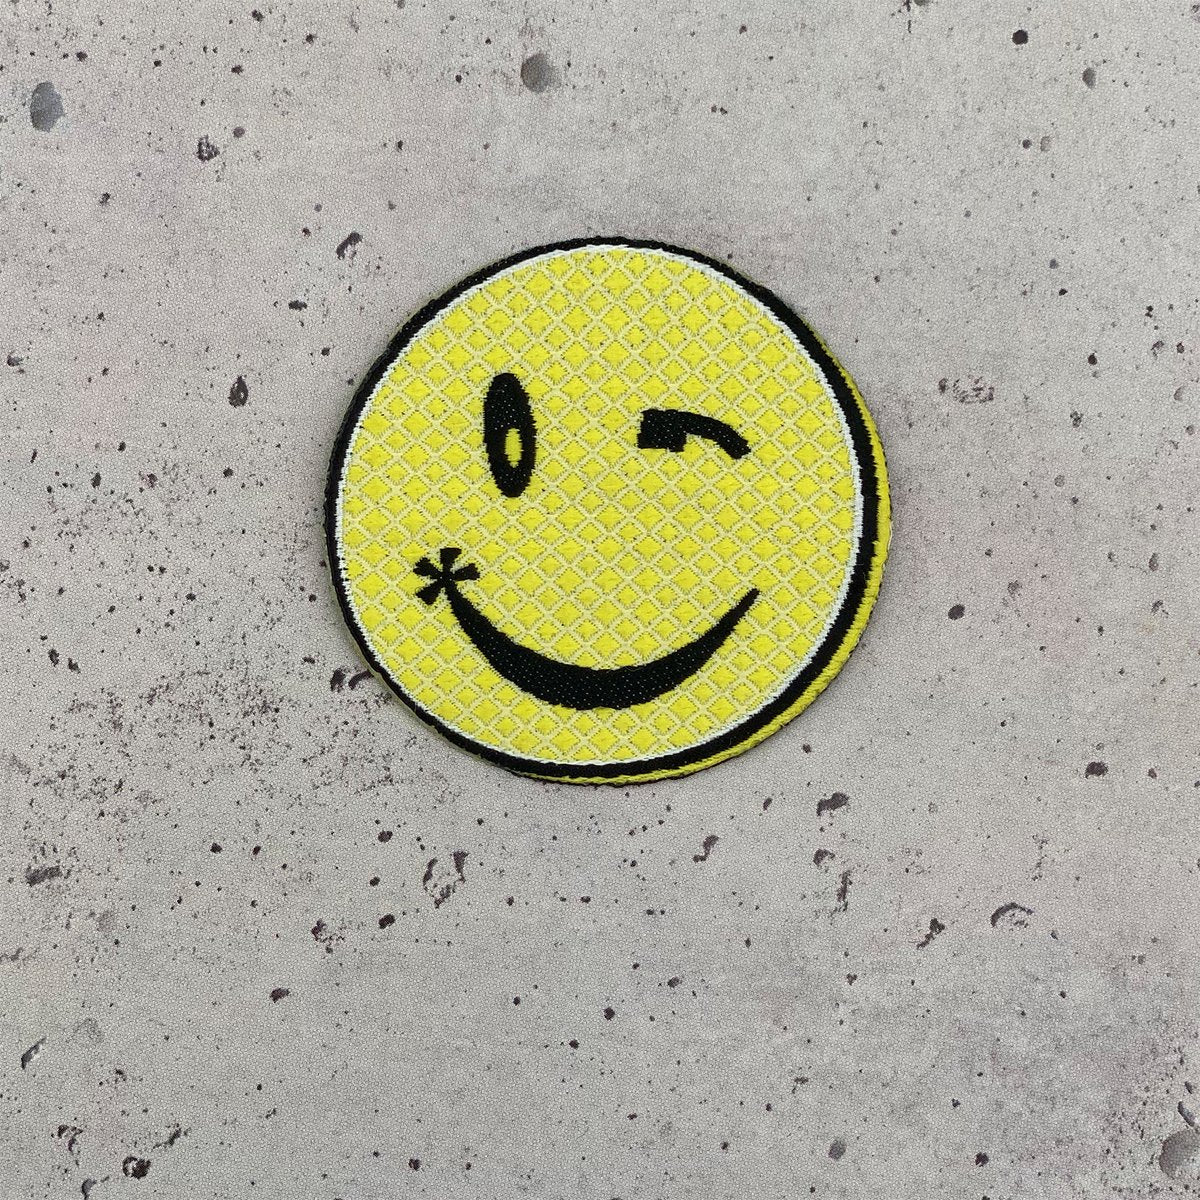 Sticker-Patch "Smile"